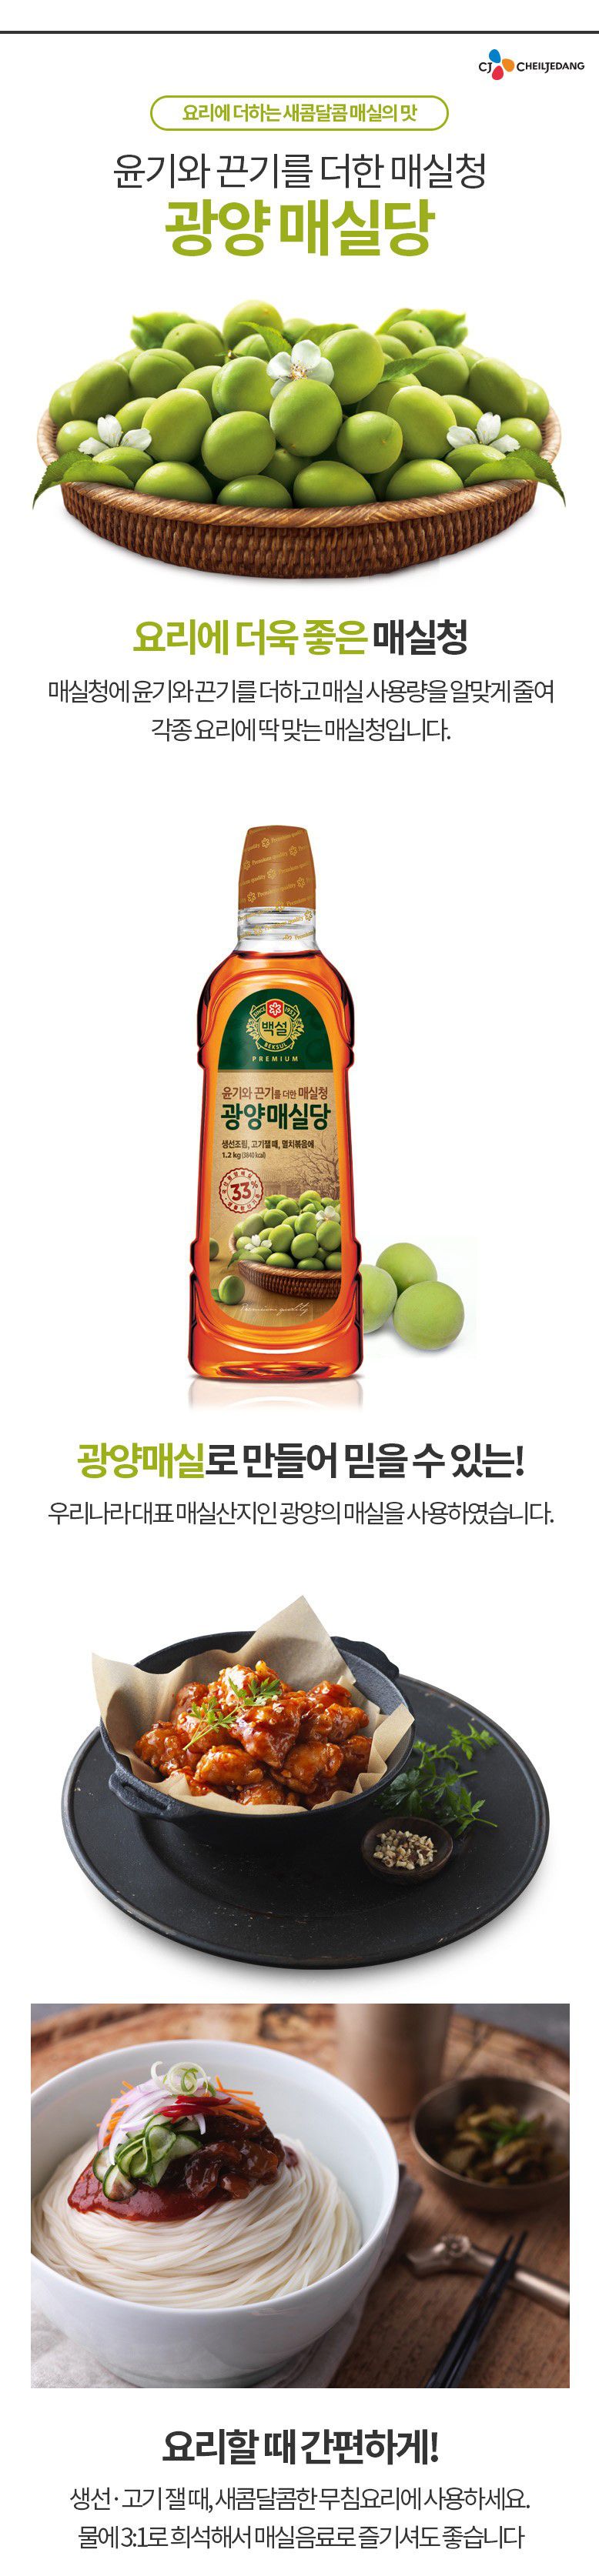 韓國食品-[CJ] Beksul Gwangyang Cooking Plum Syrup 1.2kg